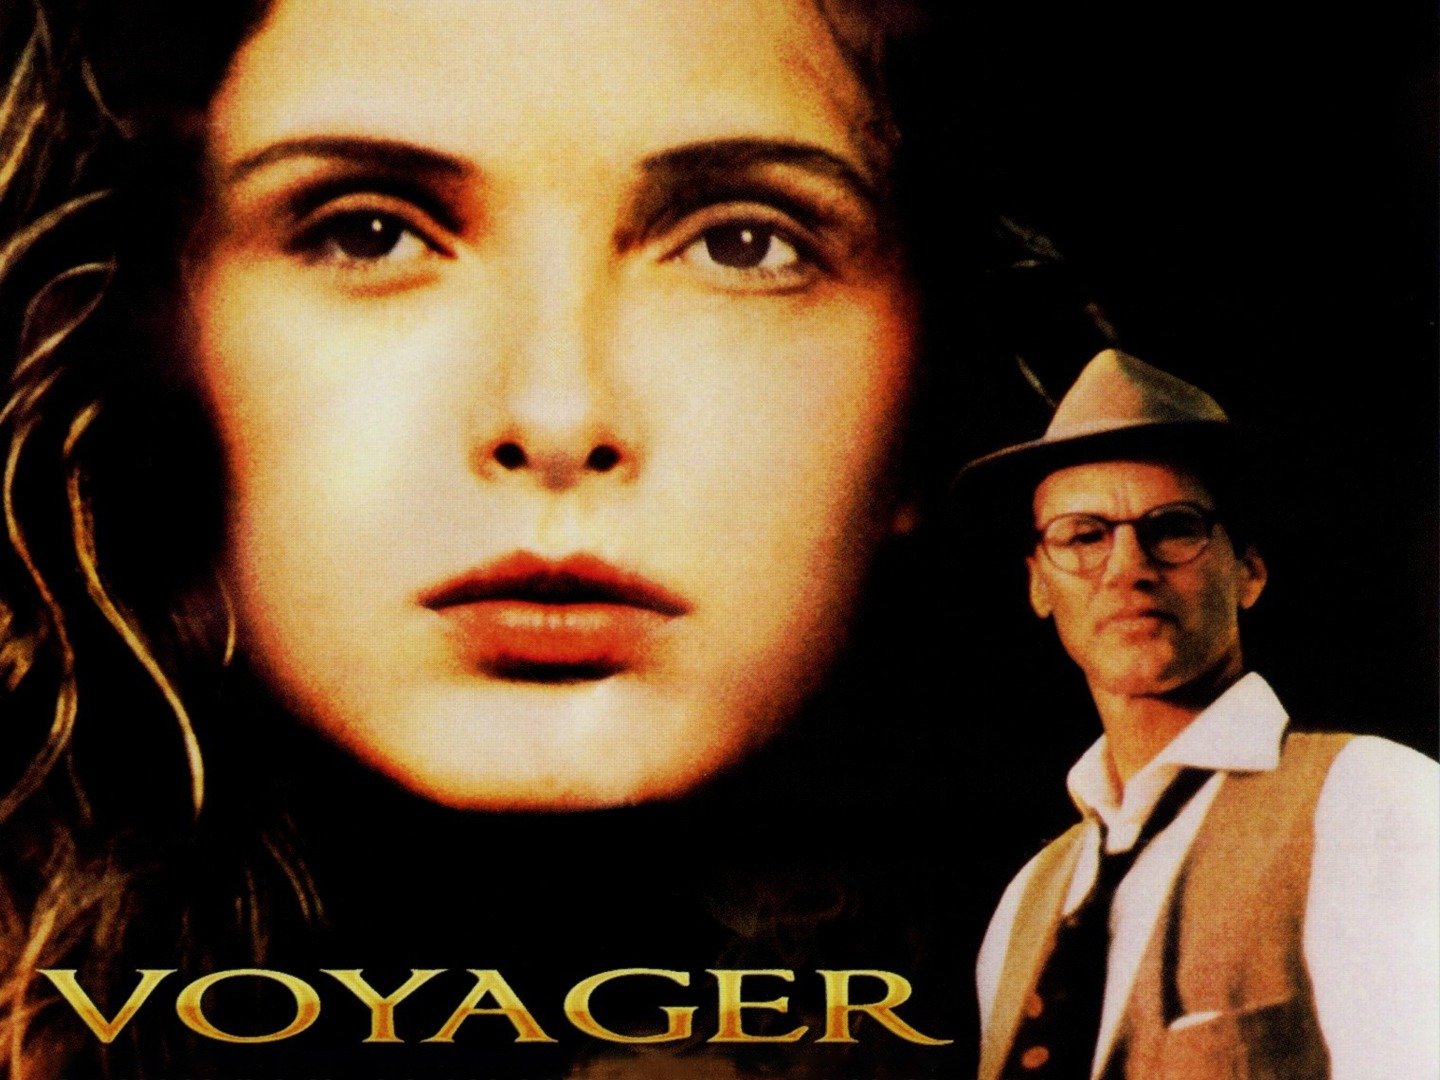 voyager cast movie